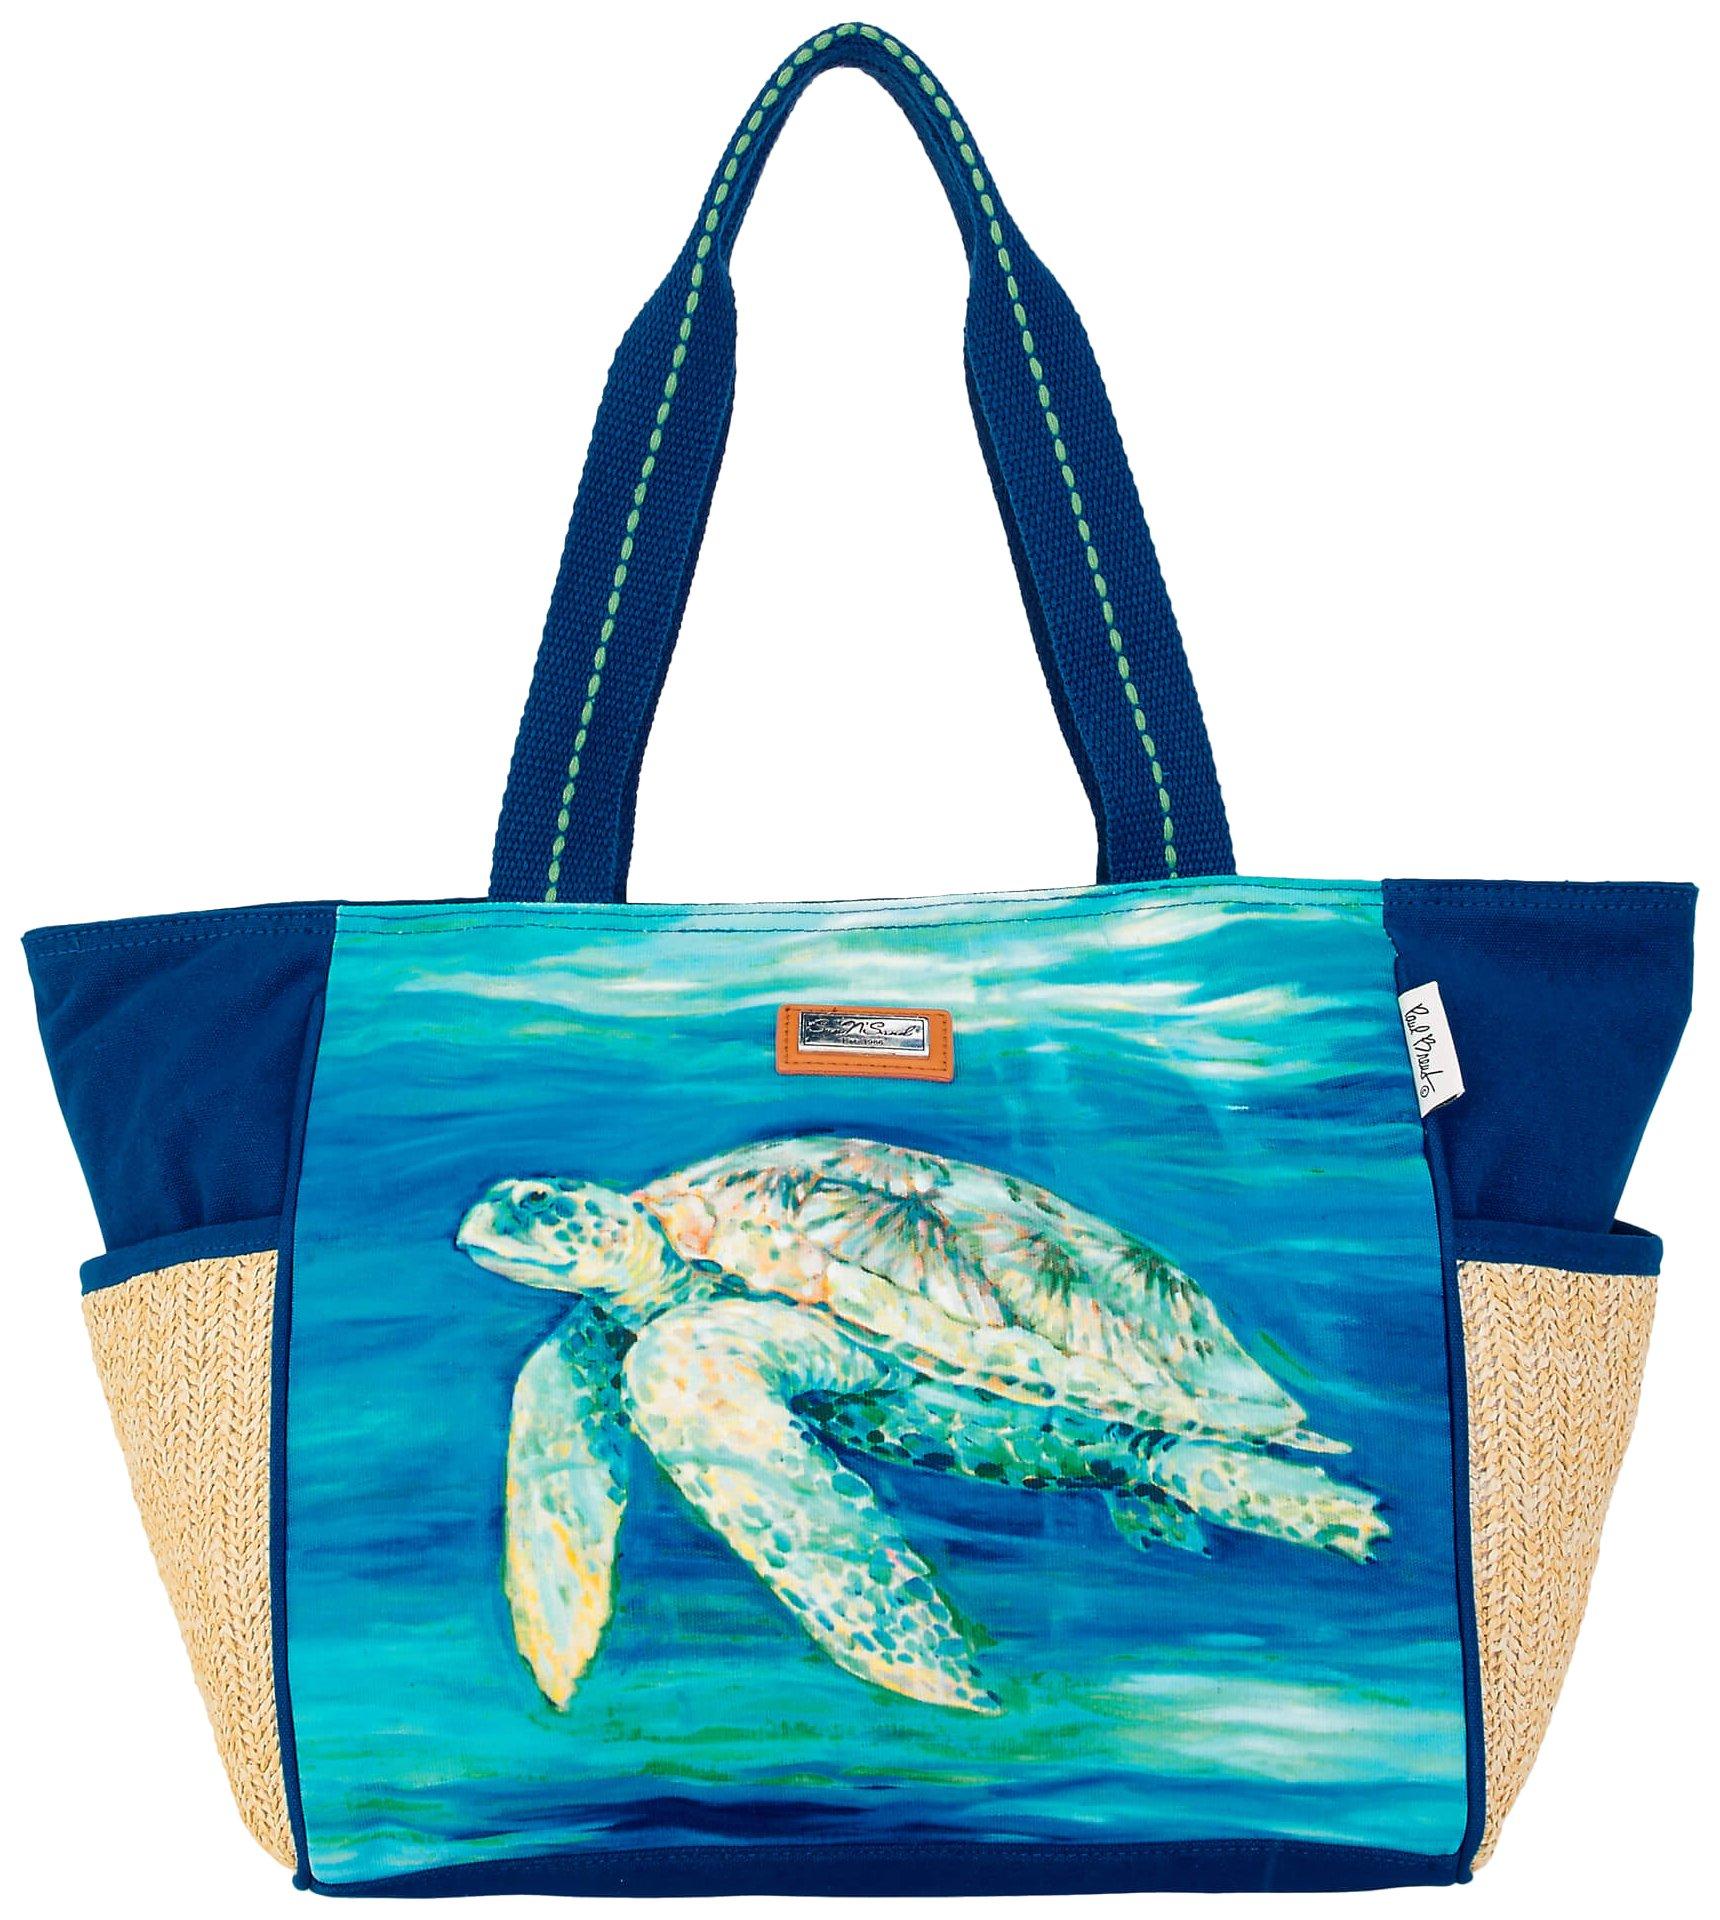 Sun N' Sand Dakota Turtle Print Canvas Beach Tote Bag